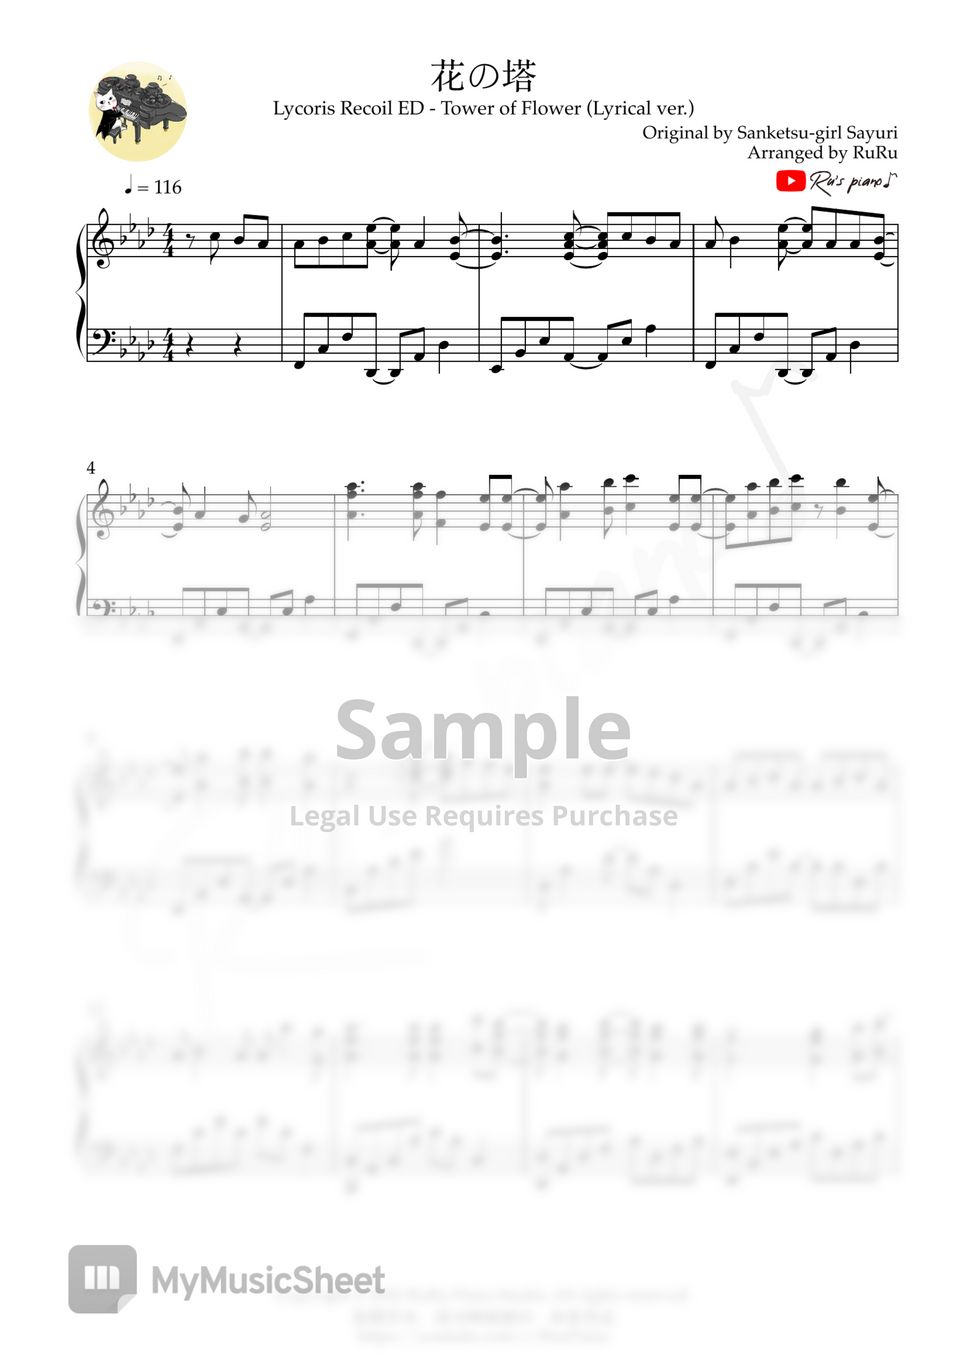 Lycoris Recoil 莉可麗絲 ED - 花の塔 Tower of Flower (Lyrical ver.) by Ru's Piano